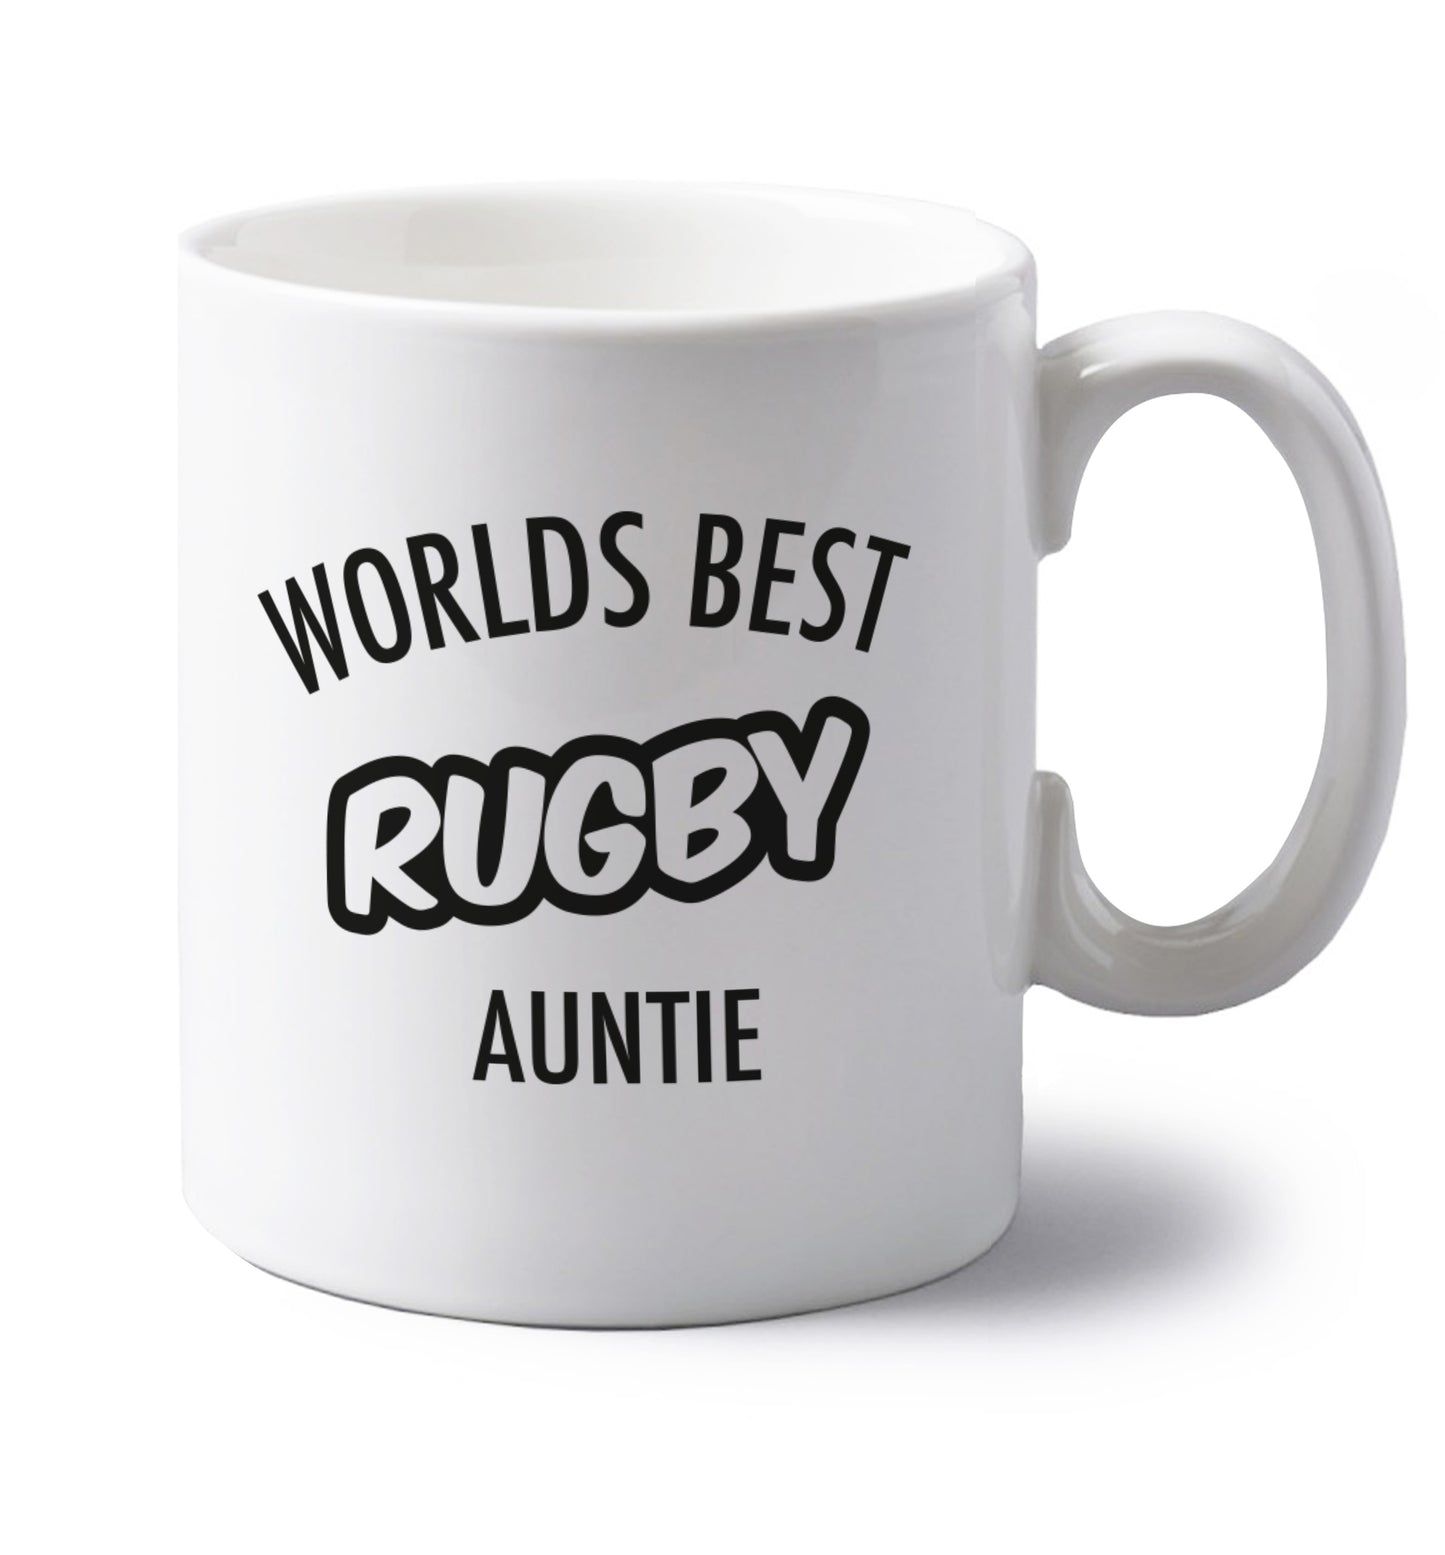 Worlds best rugby auntie left handed white ceramic mug 